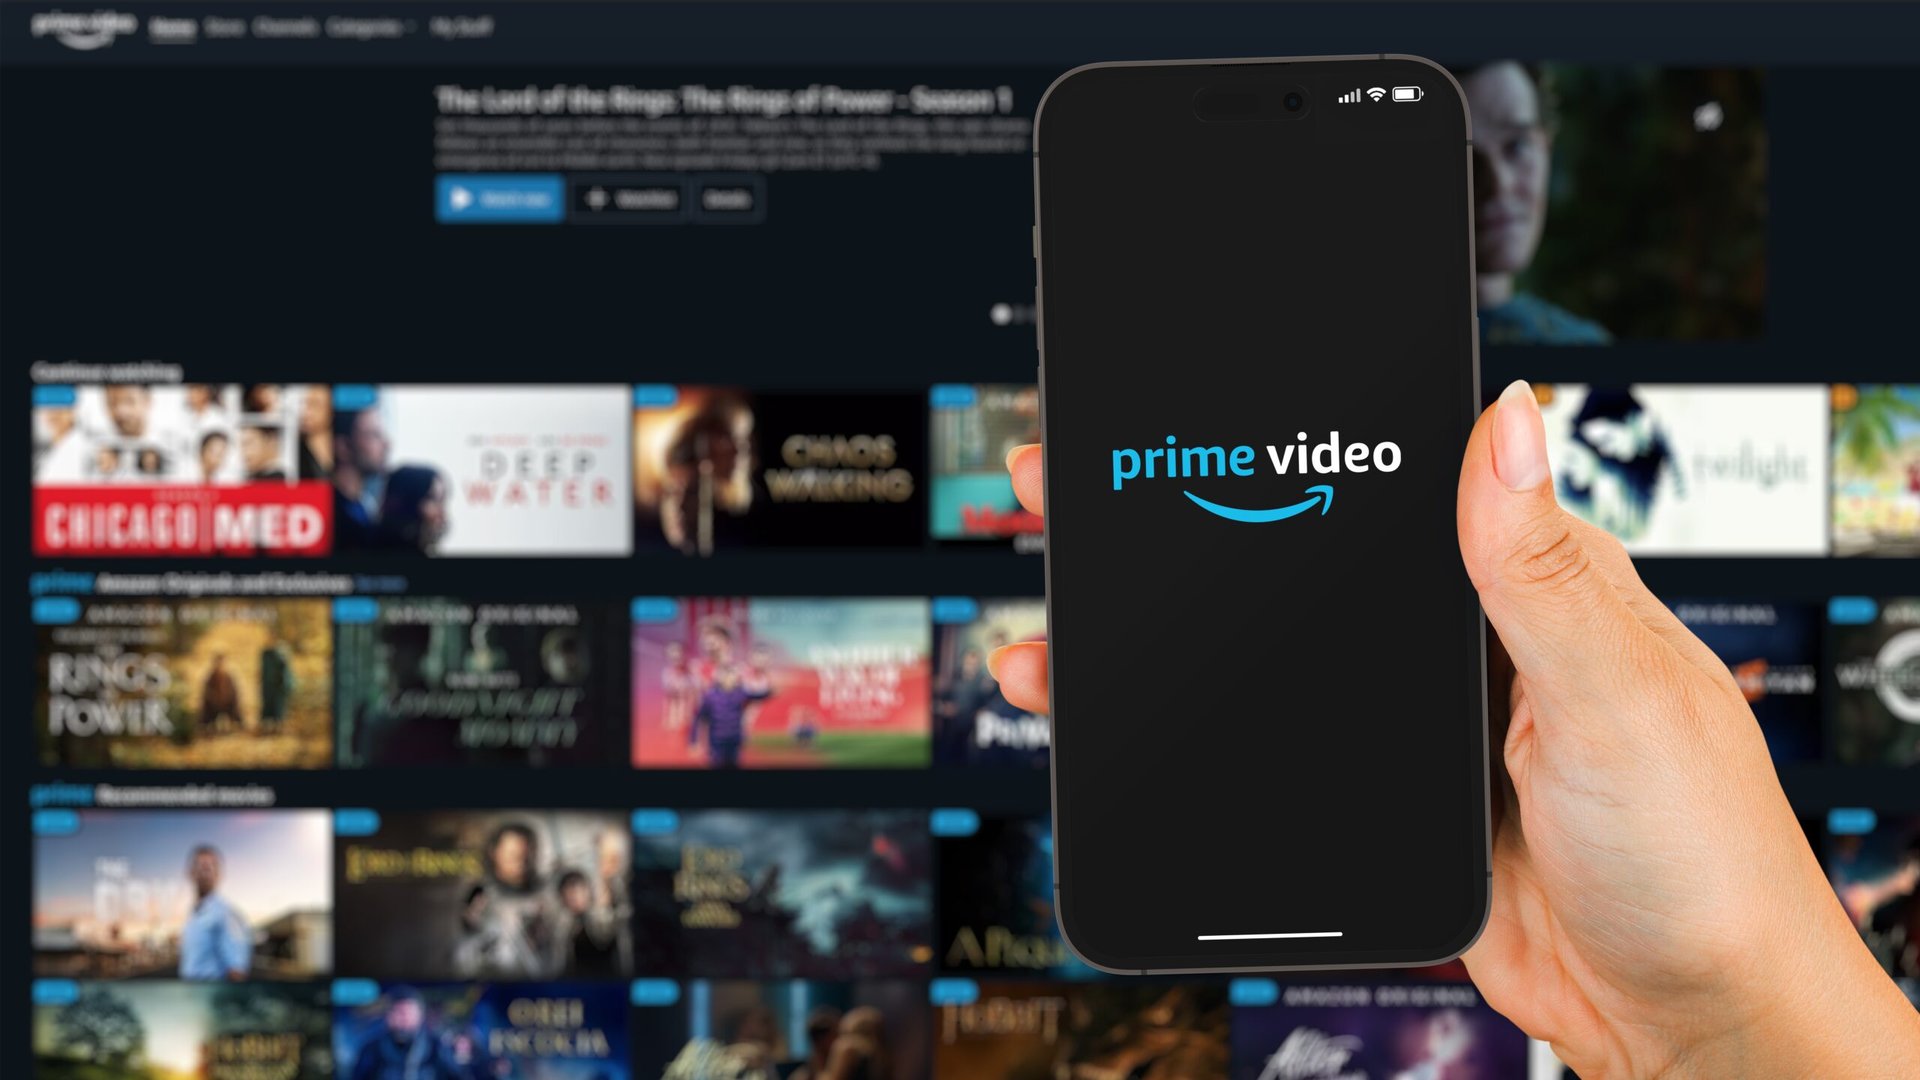 Amazon Prime Video's streaming service